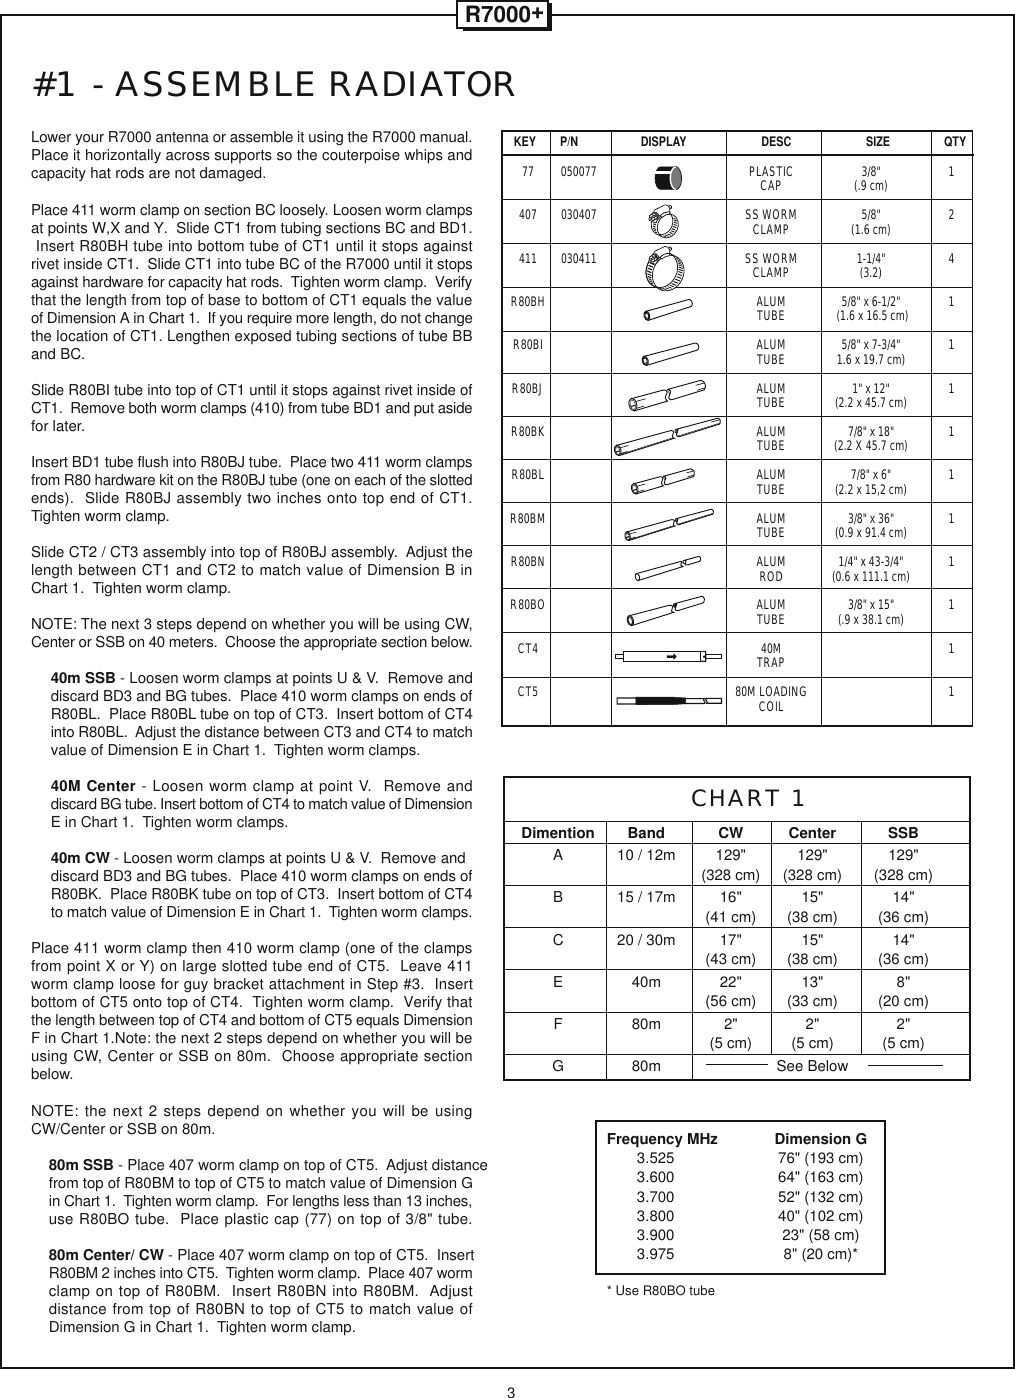 Page 4 of 8 - CUSHCRAFT--R-7000+INSTALLATION CUSHCRAFT--R-7000 INSTALLATION